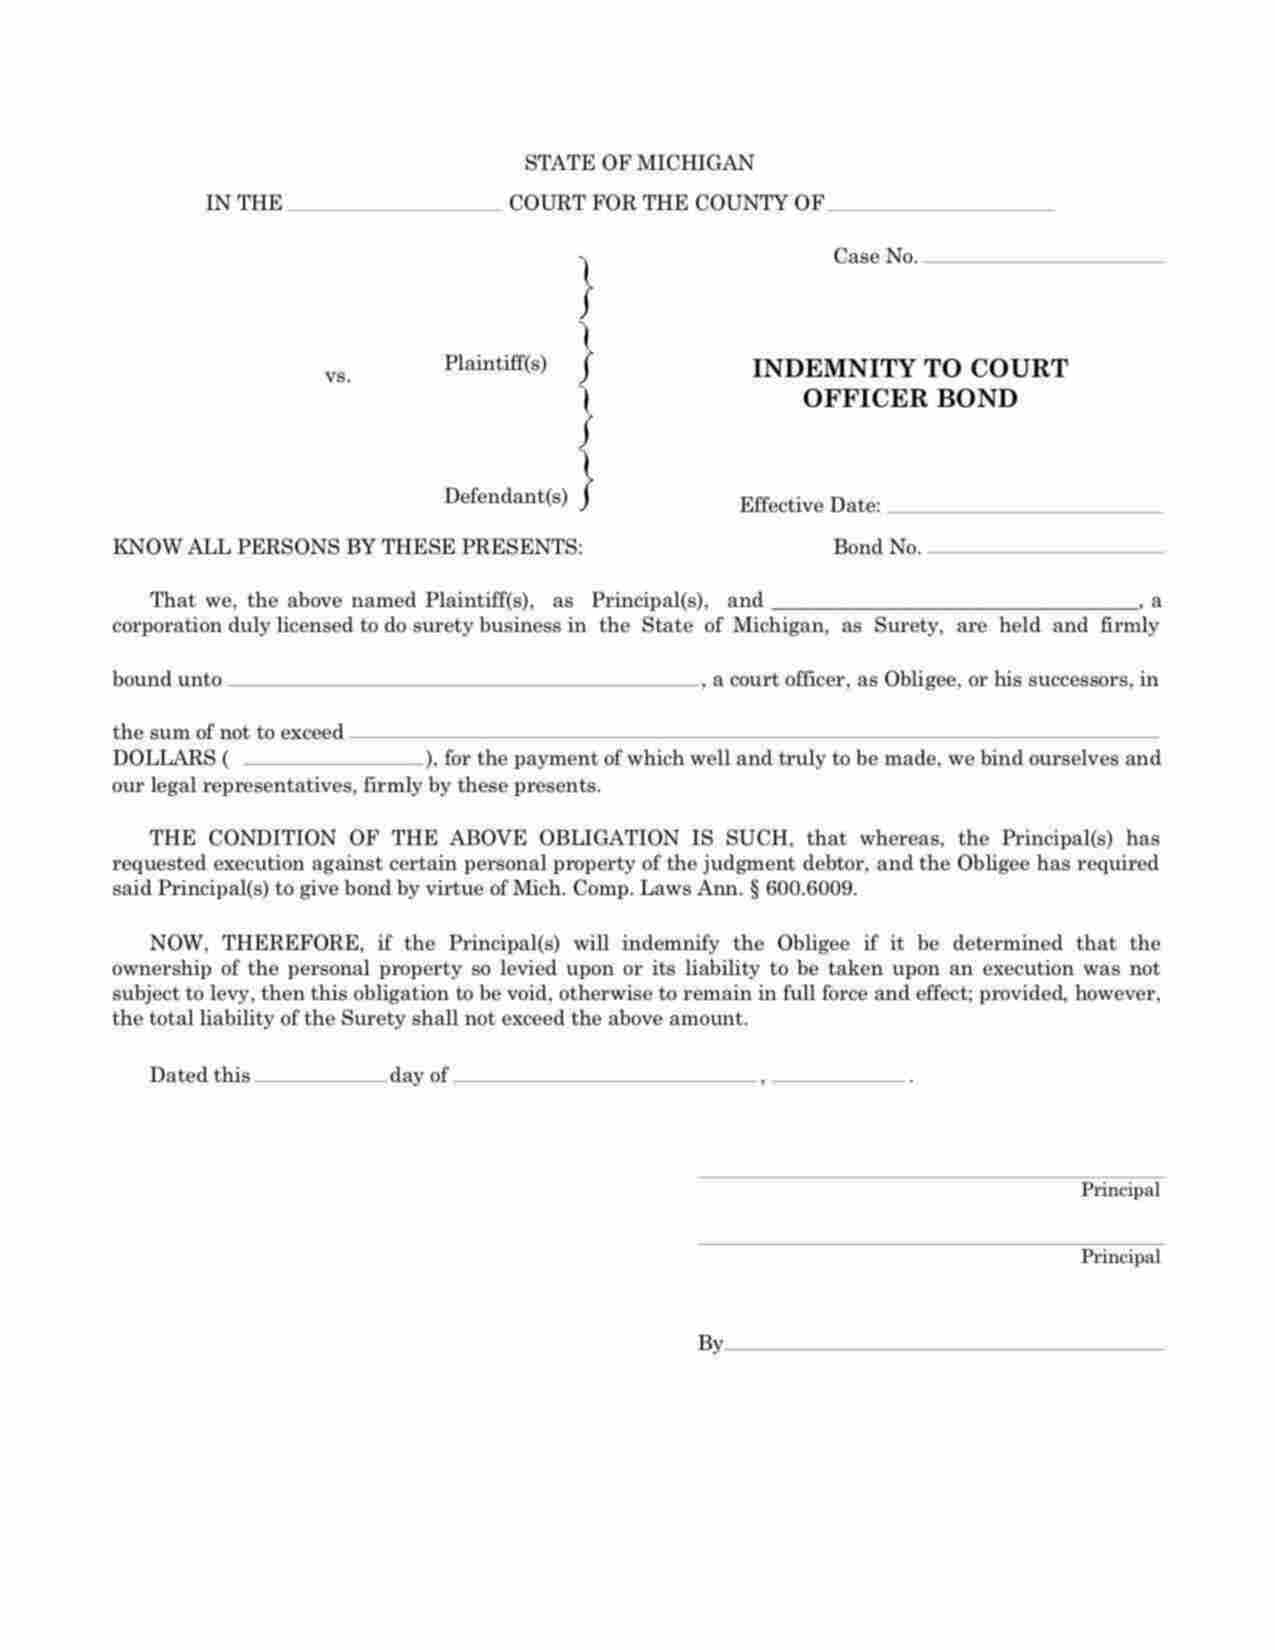 Michigan Indemnity to Court Officer Bond Form